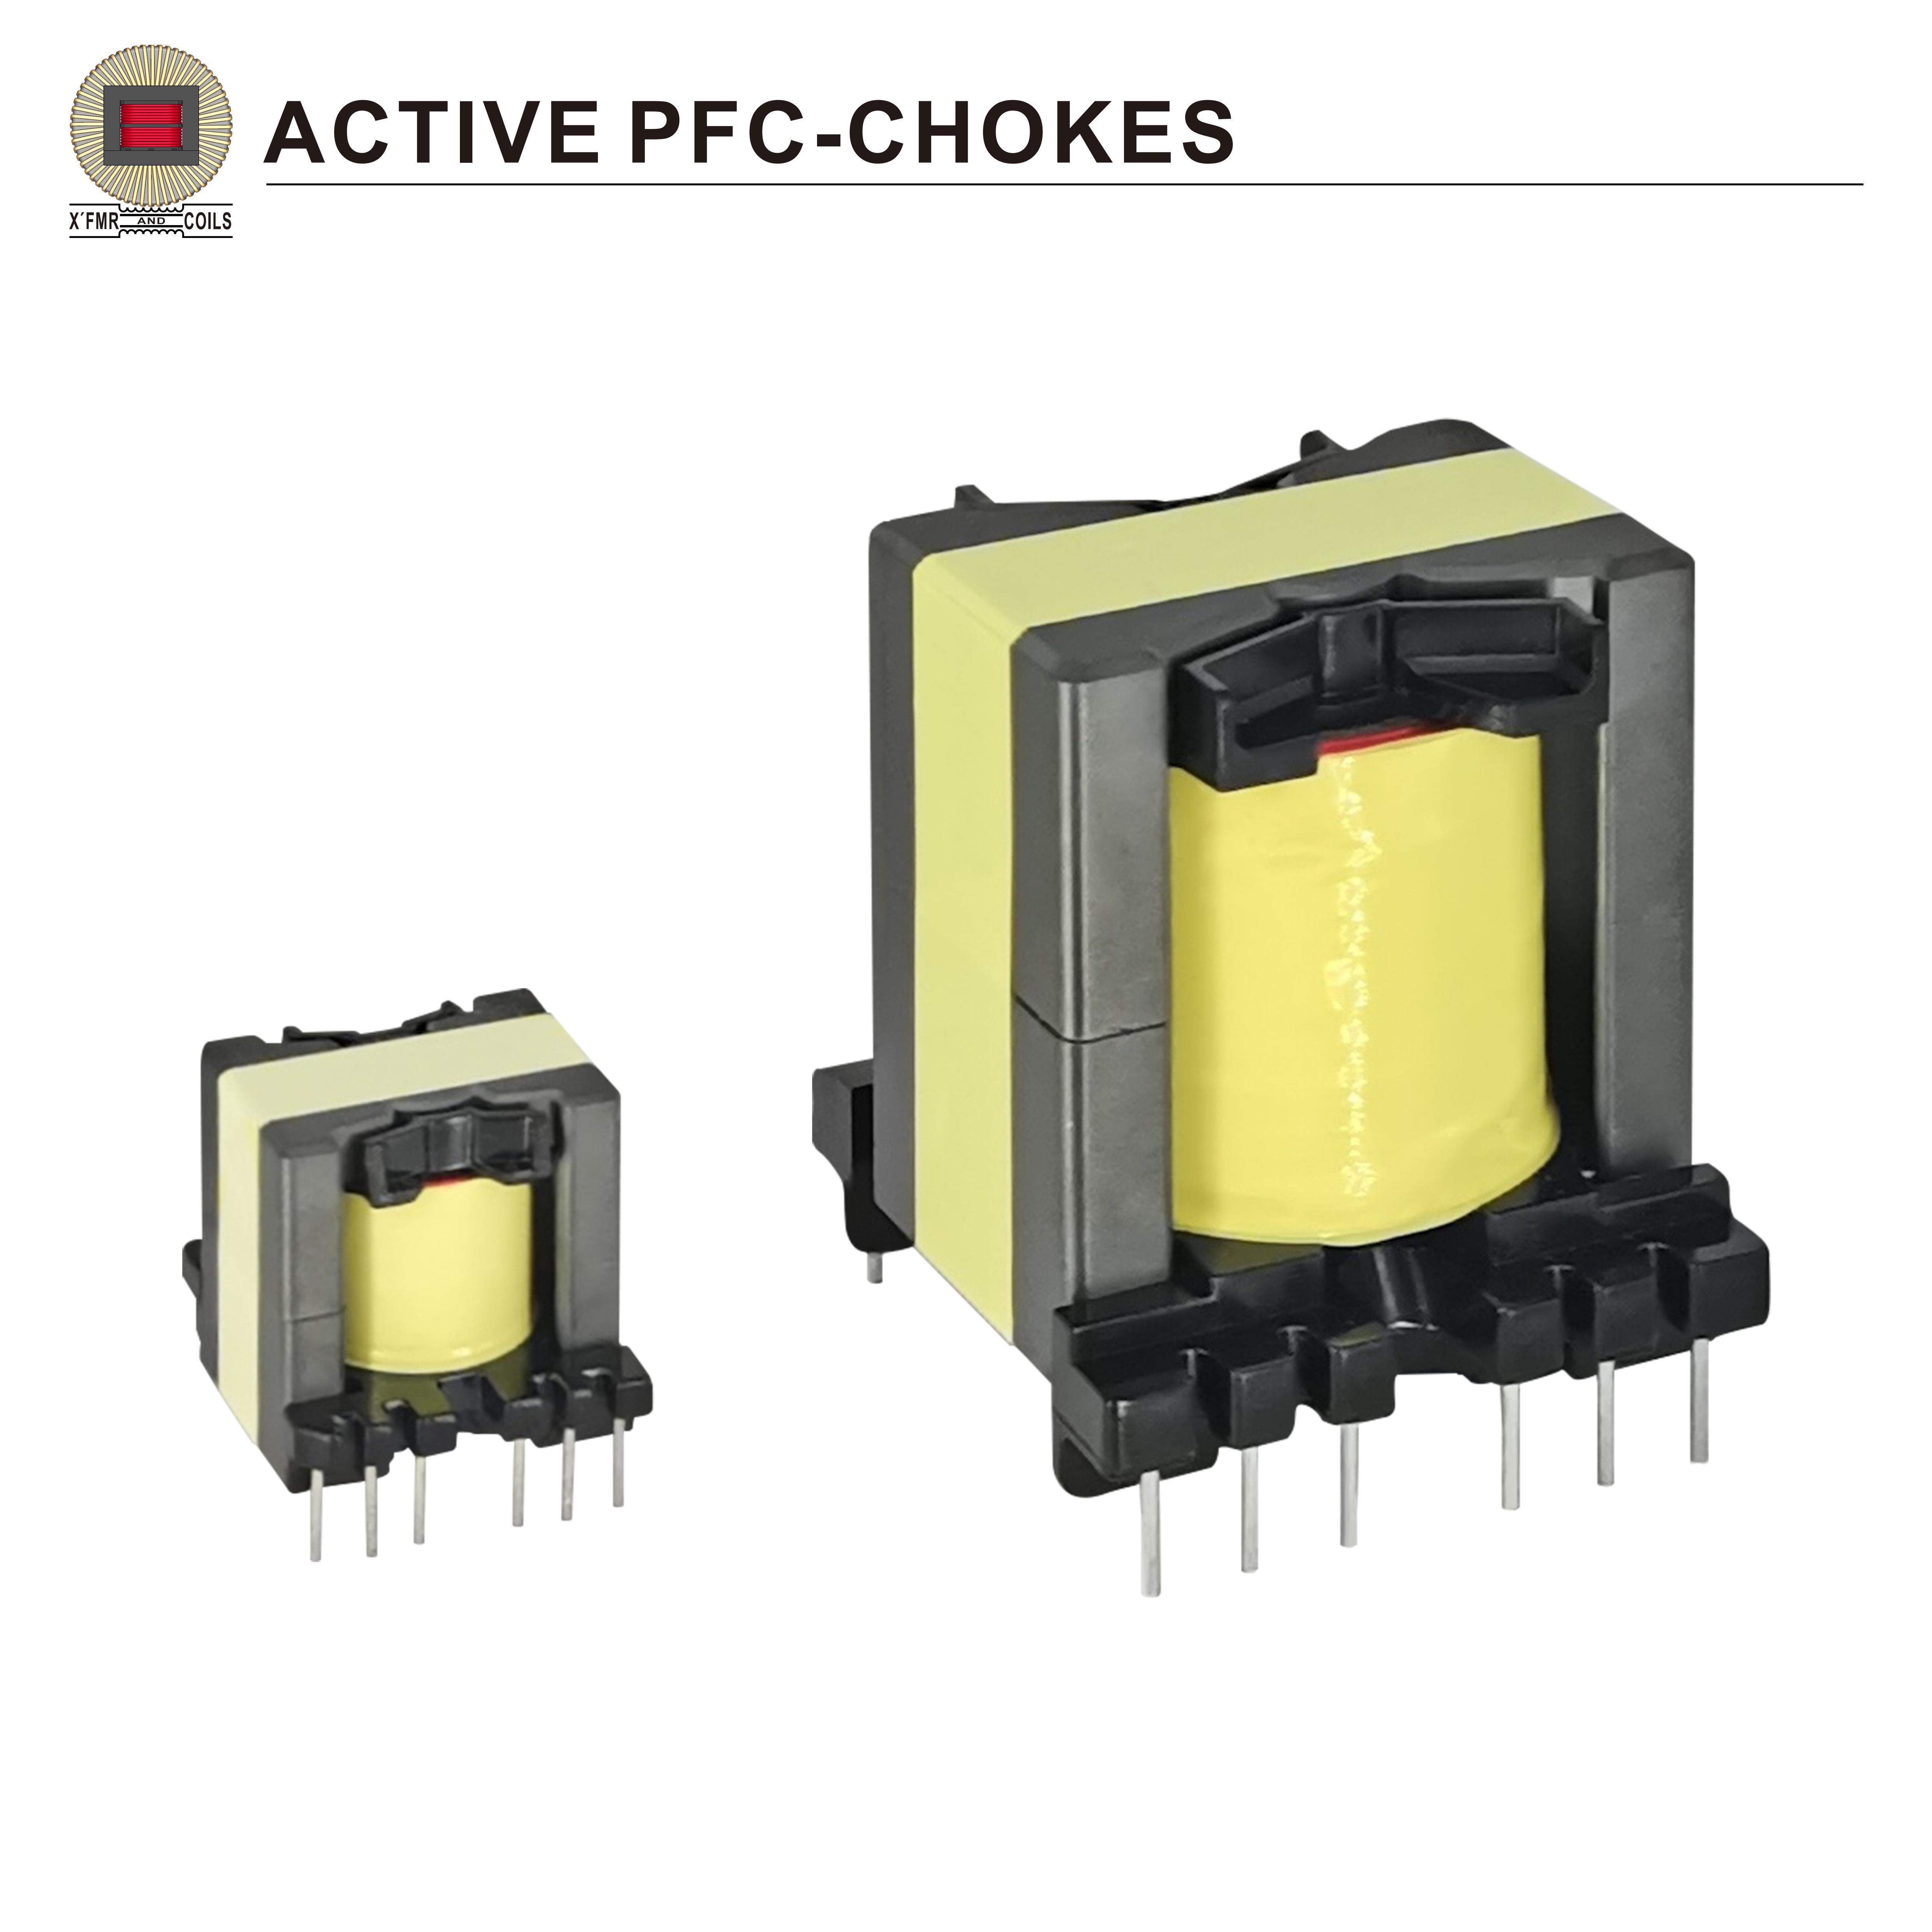 Active PFC-Chokes APFC-01 Series